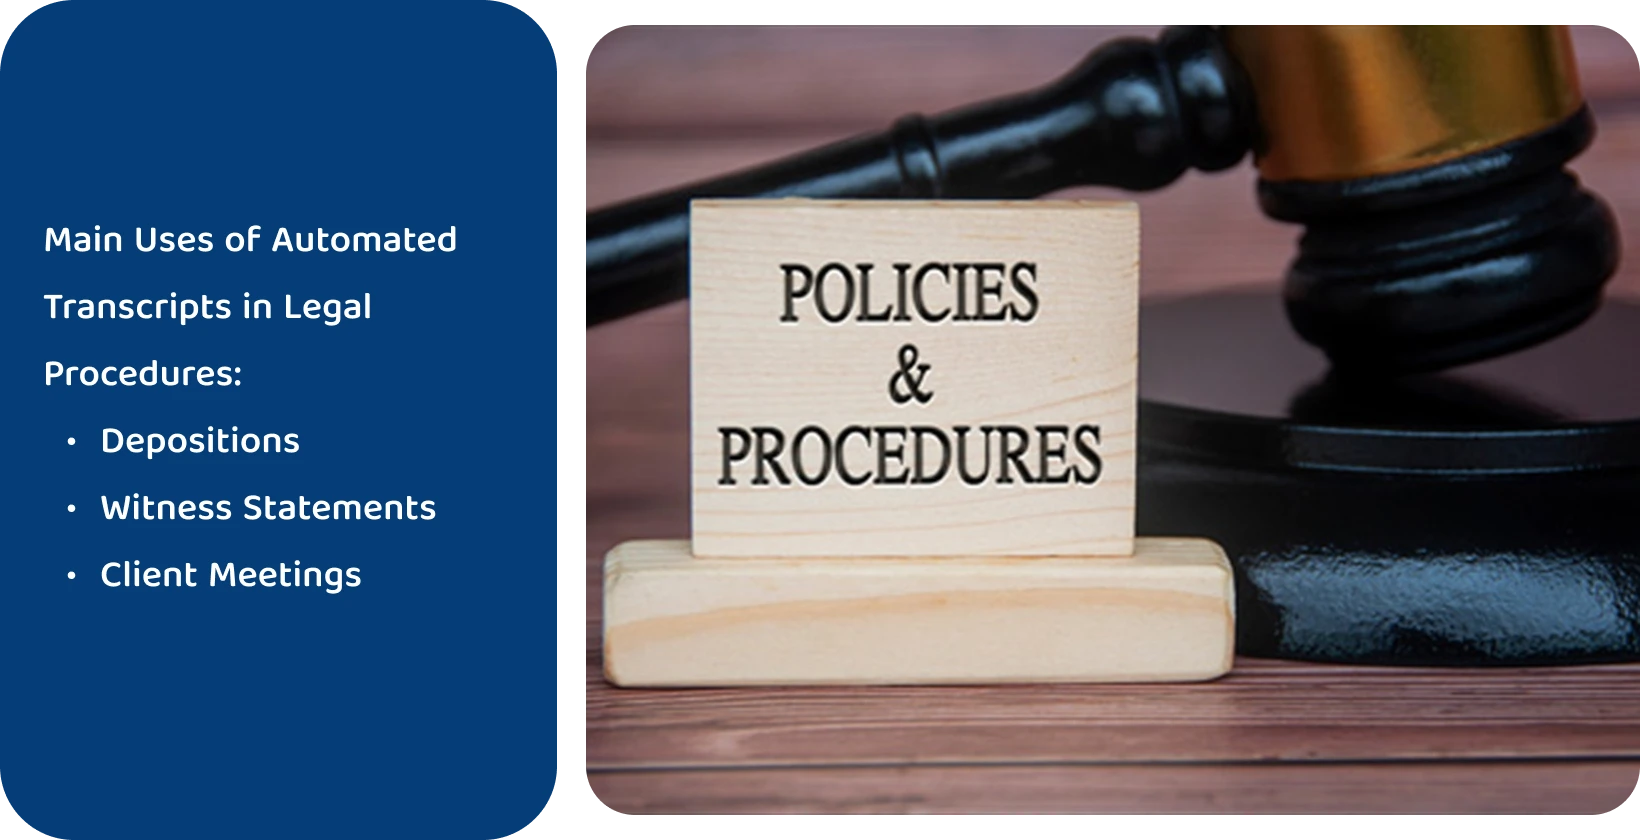 'Policies & Procedures' 표지판 옆의 망치는 자동 전사 도구가 충족하는 법적 표준을 나타냅니다.